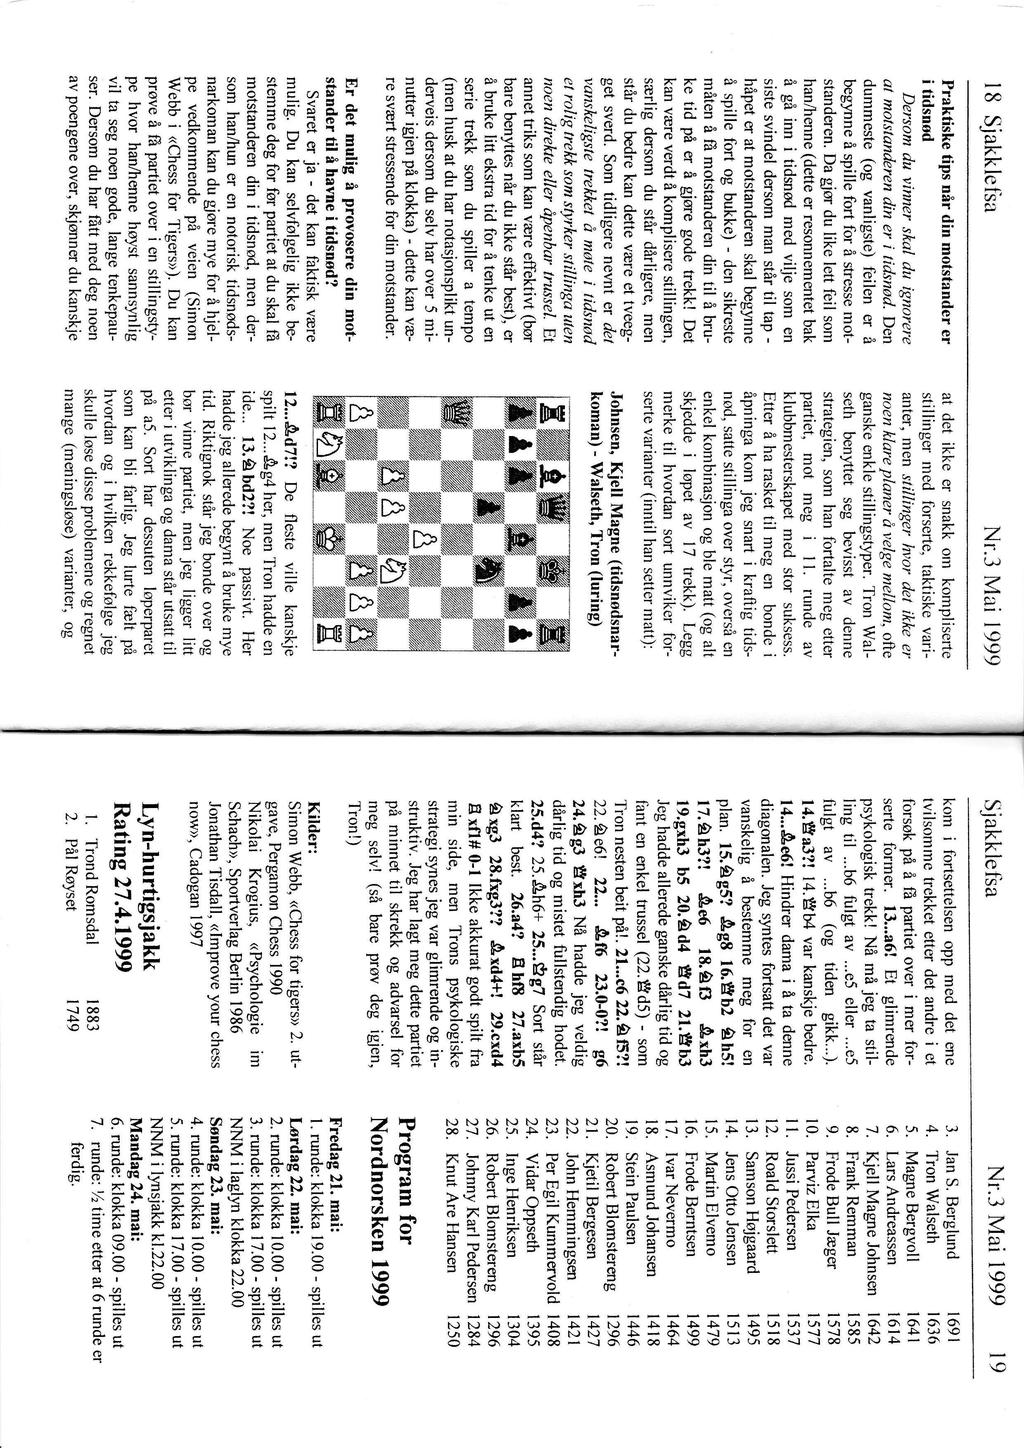 Nr.3 Ma 1999 18 Sjakklefba Praktske tps når dn motstander er tdsnød Dersam du vnner skal du gnorere at motstqnderen dn er tdsnød.